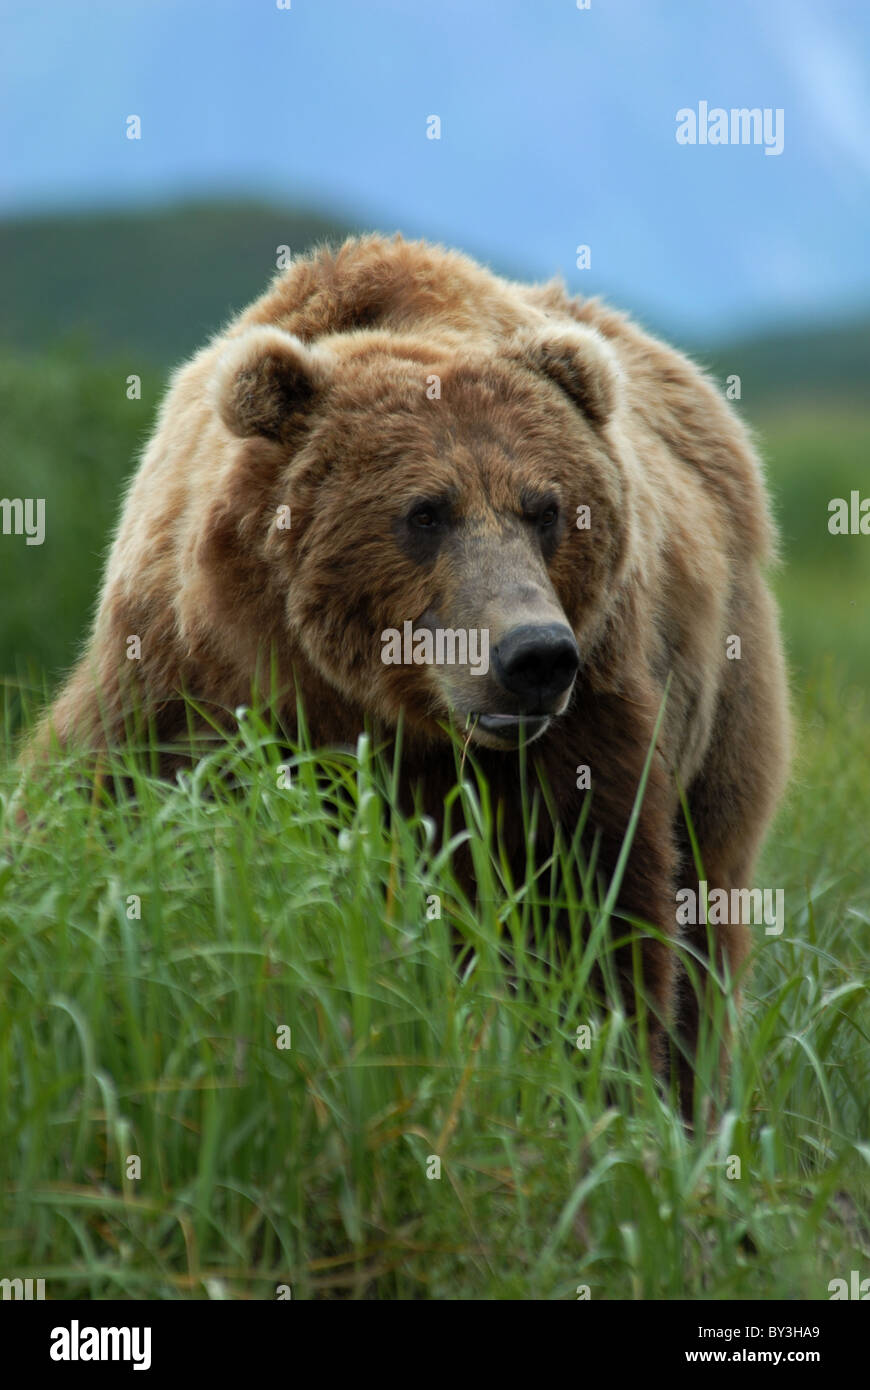 Bownbear standing in sedge grass, Kukak Bay, Katmai National Park, Alaska Stock Photo